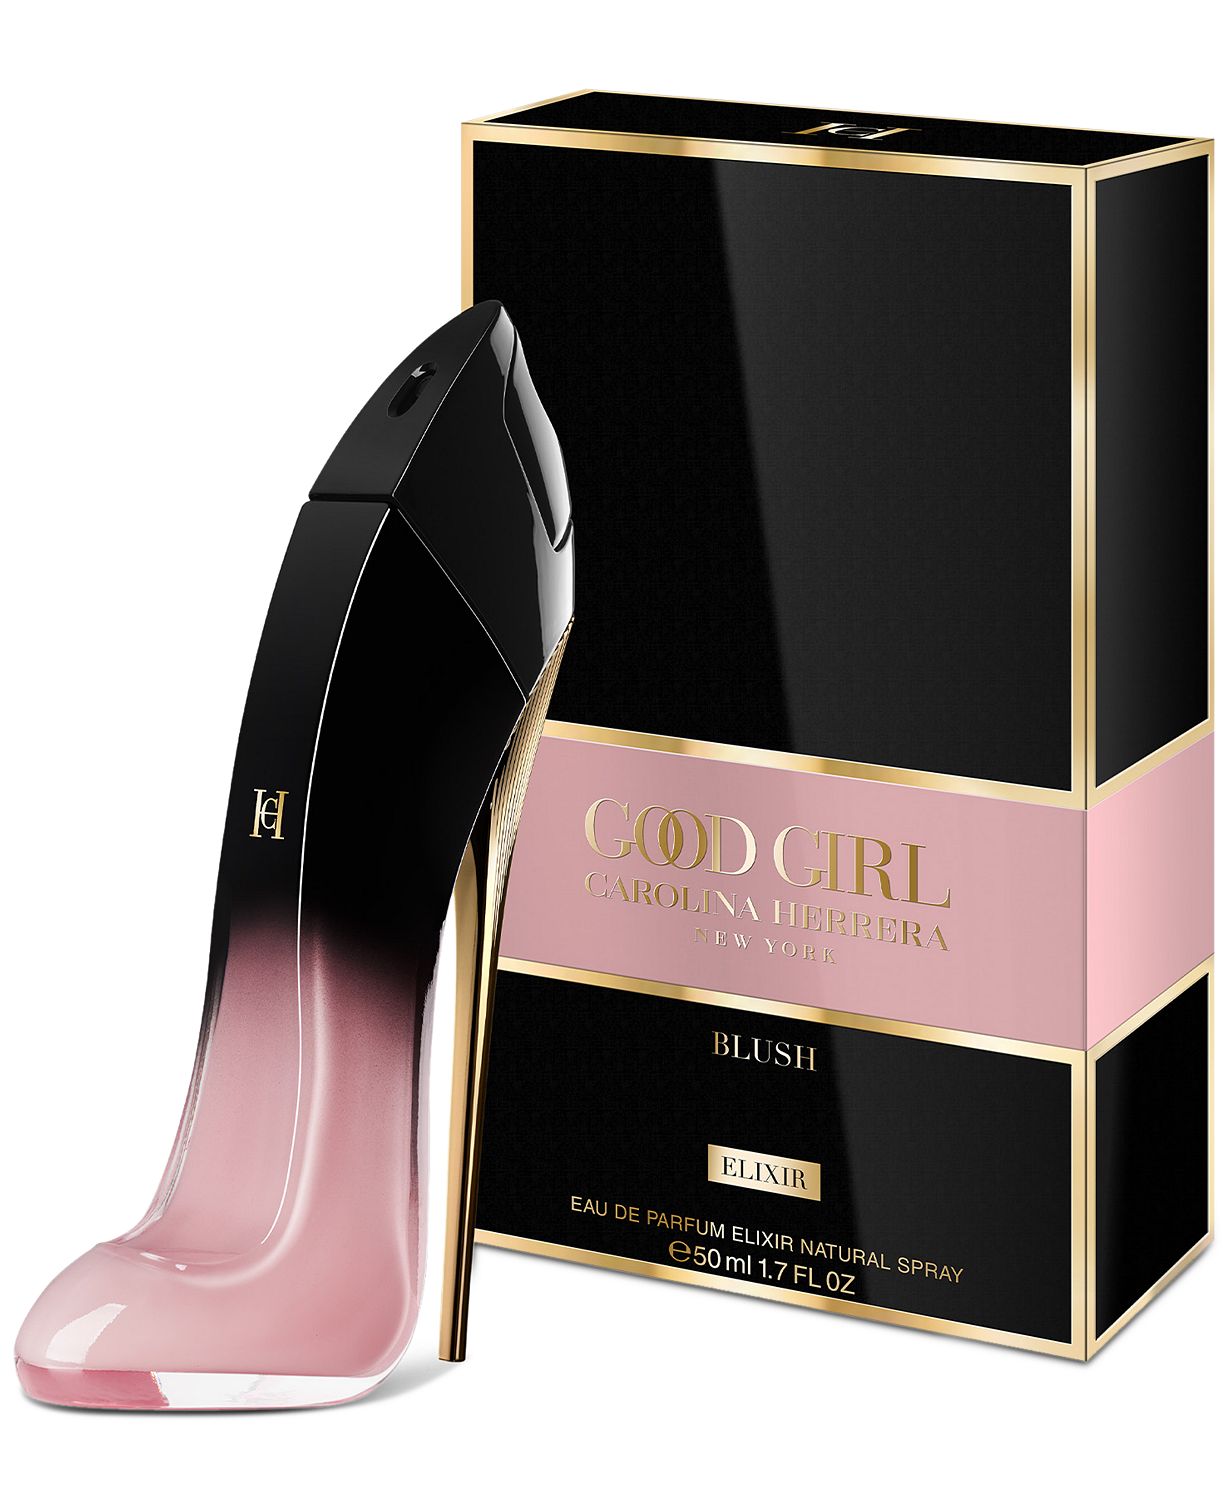 Good Girl Blush Elixir Eau de Parfum, 1.7 oz.